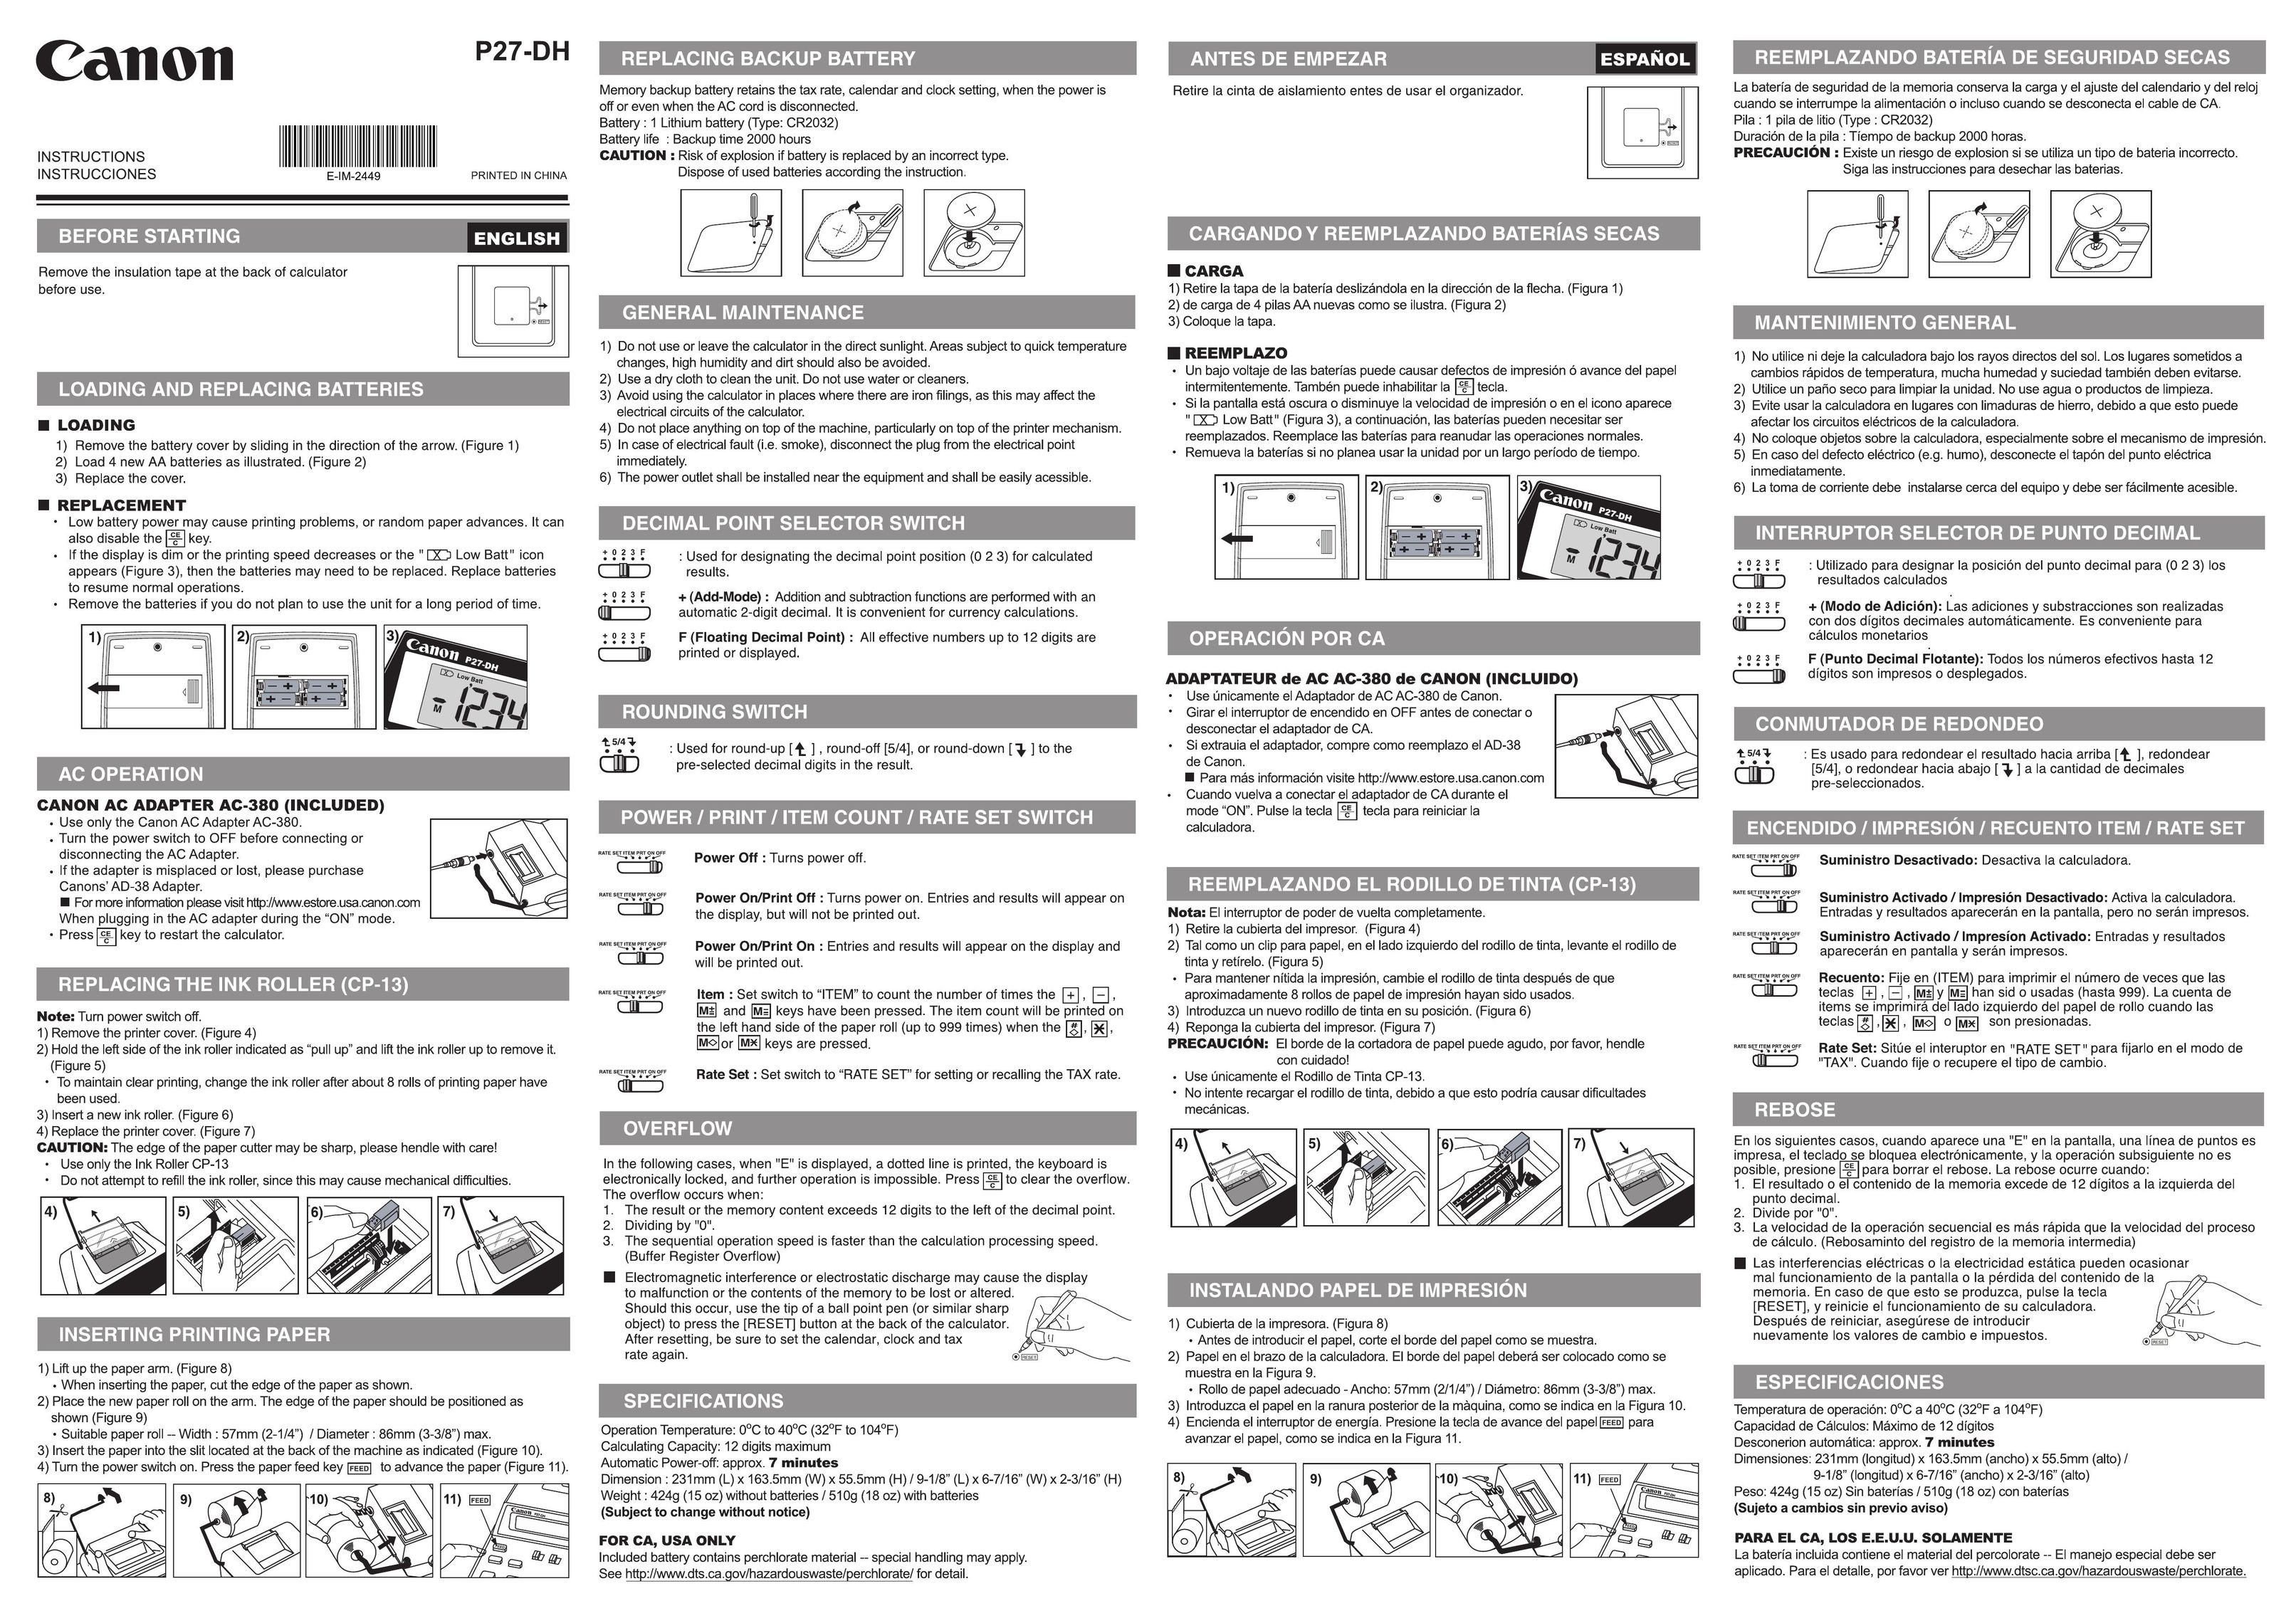 Canon P27-DH Calculator User Manual